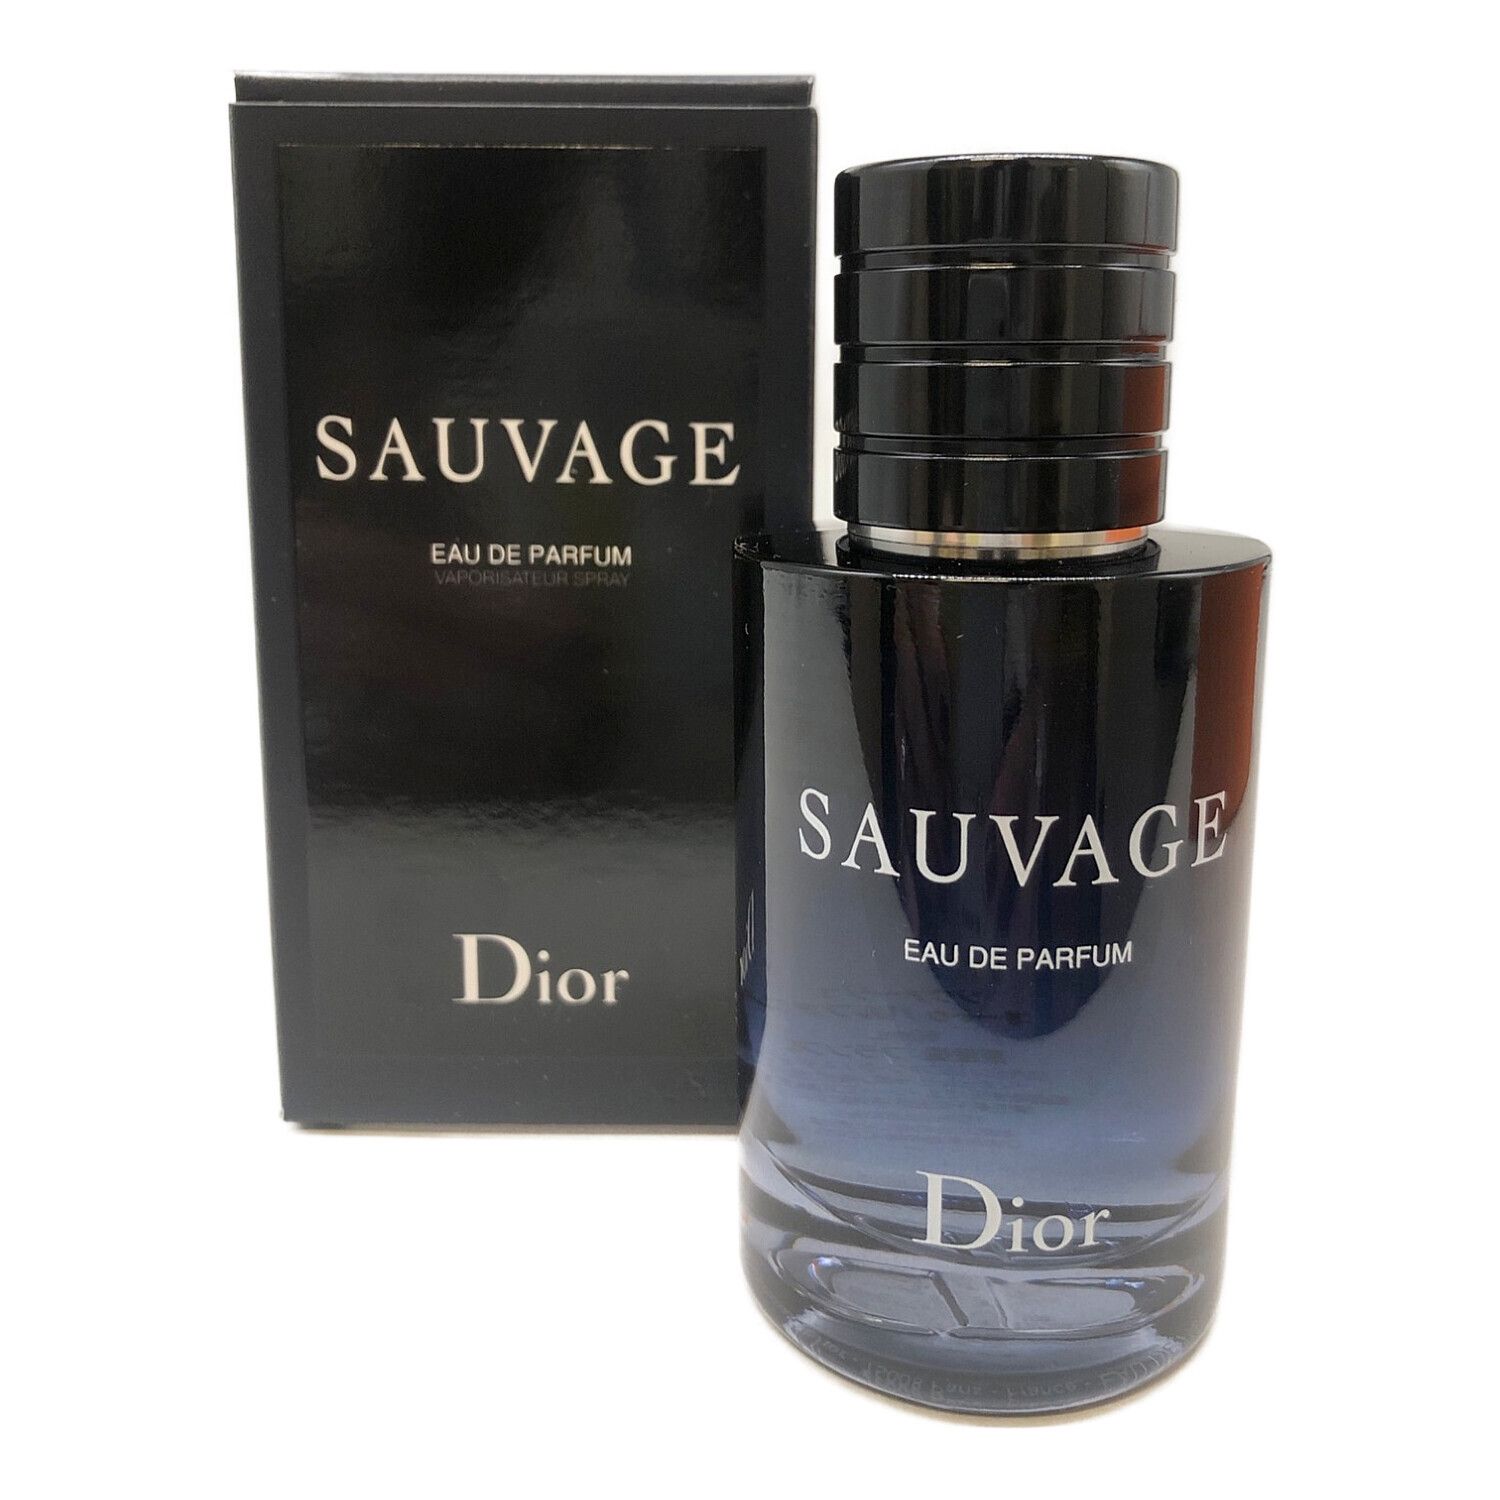 Dior SAUVAGE EAU DE PARFUM 60mℓ香水(男性用) - 香水(男性用)